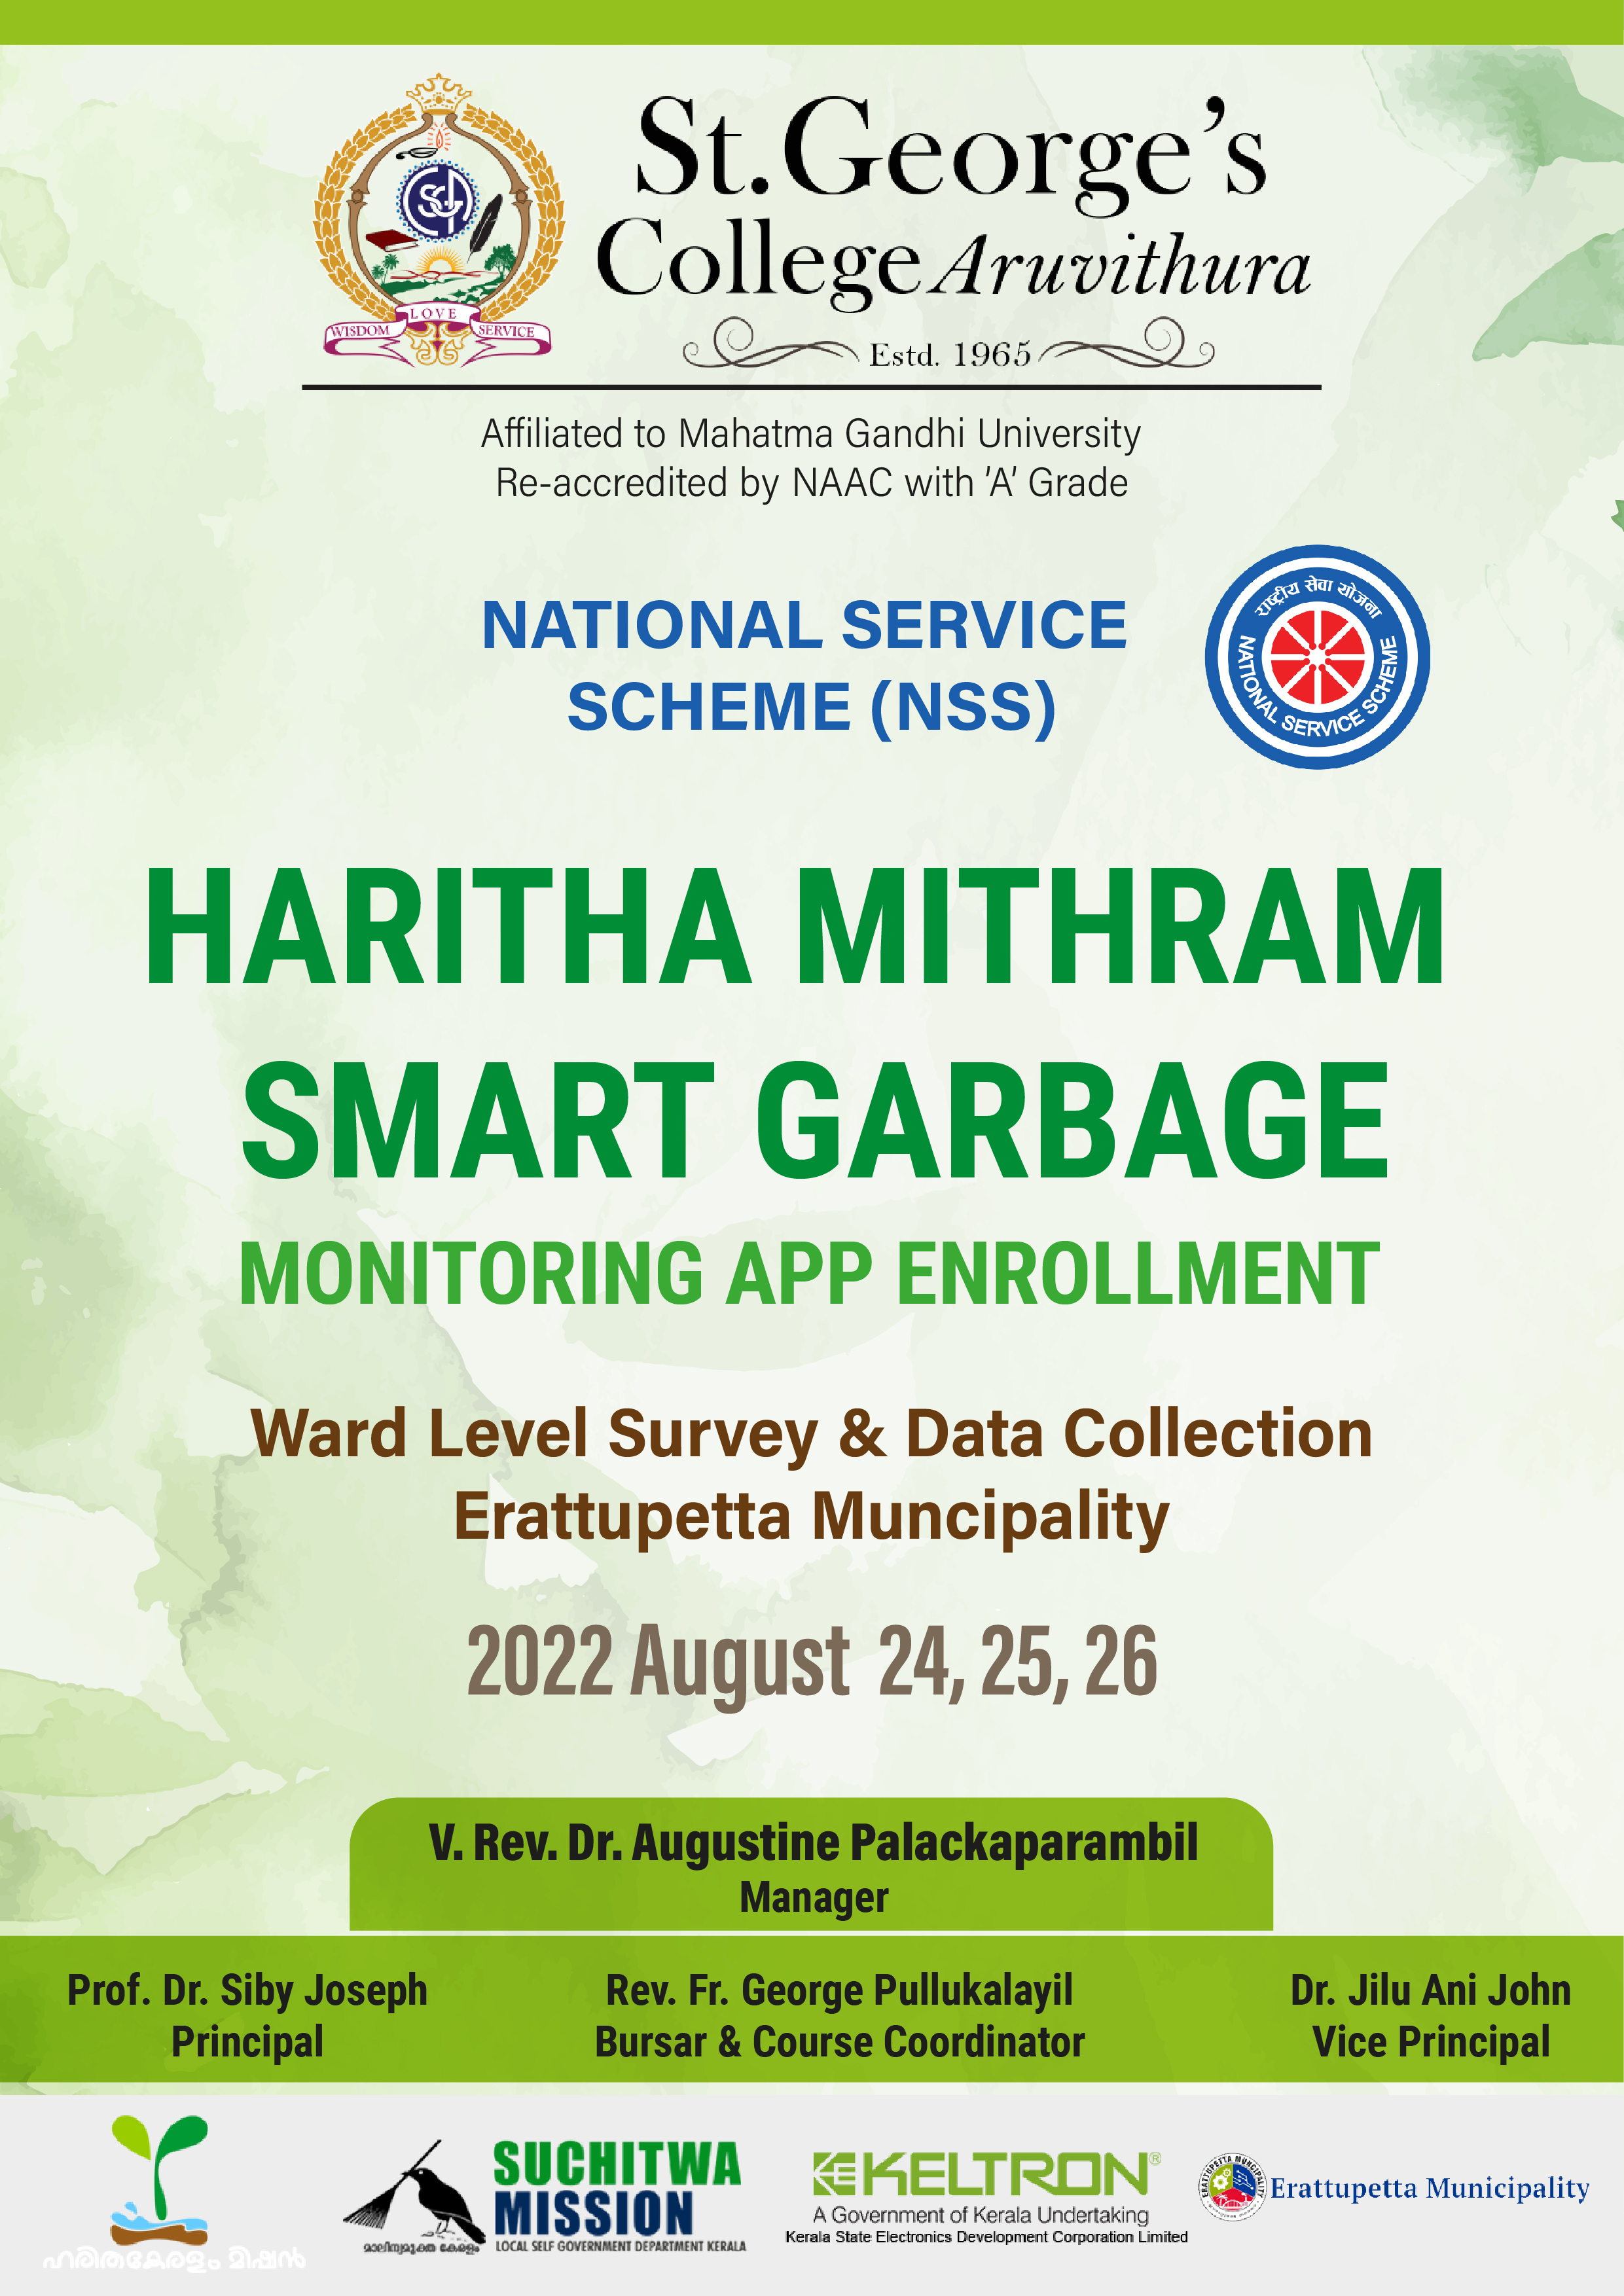 Haritha Mithram Smart Garbage - Monitoring App Enrollment 